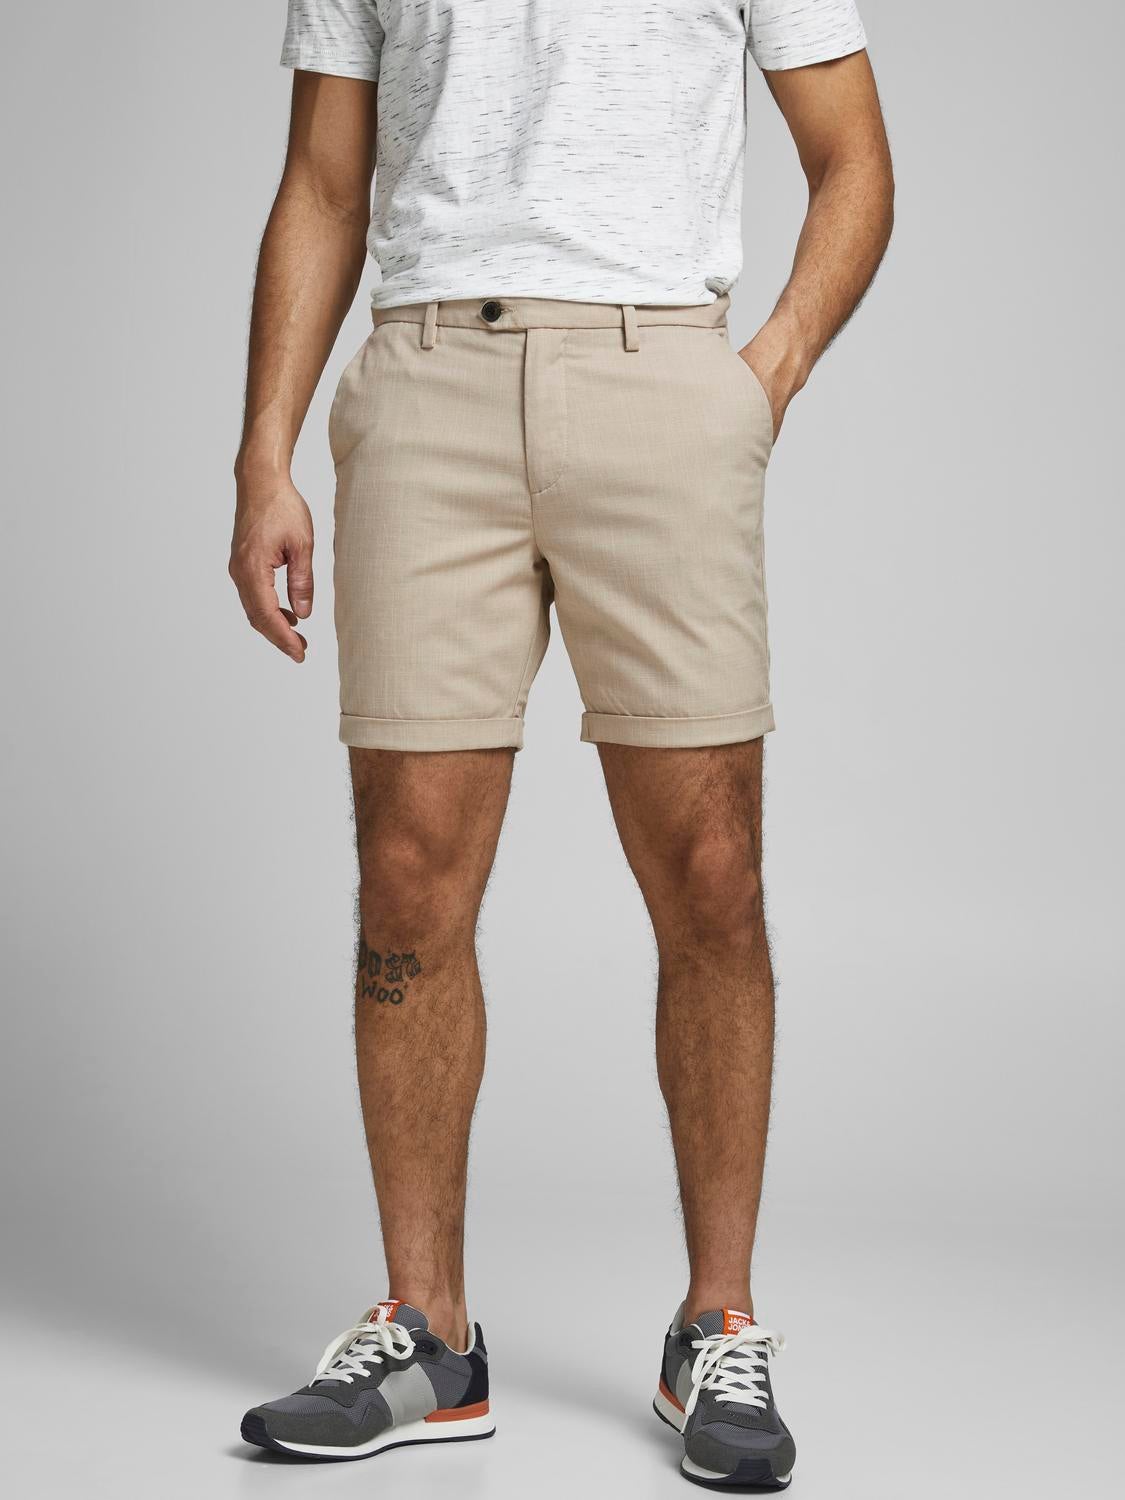 Gray/Black S Jack & Jones Jack & Jones shorts discount 62% MEN FASHION Trousers Shorts 